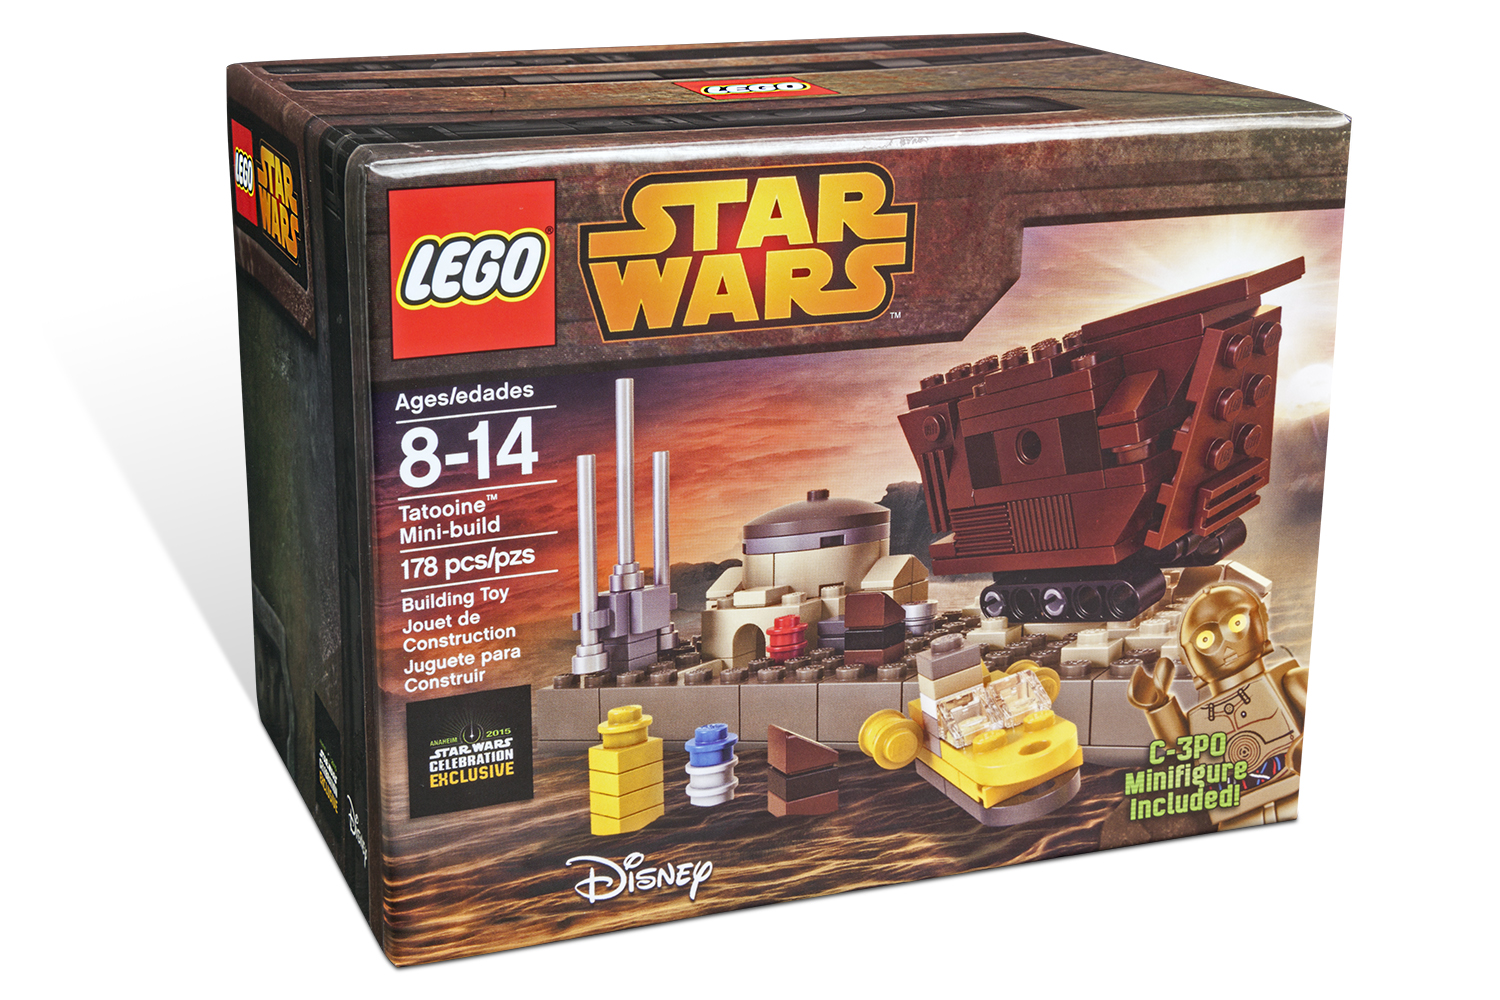 SWC] LEGO Star Wars Celebration Exclusive Tatooine Mini-build Set Revealed  - FBTB